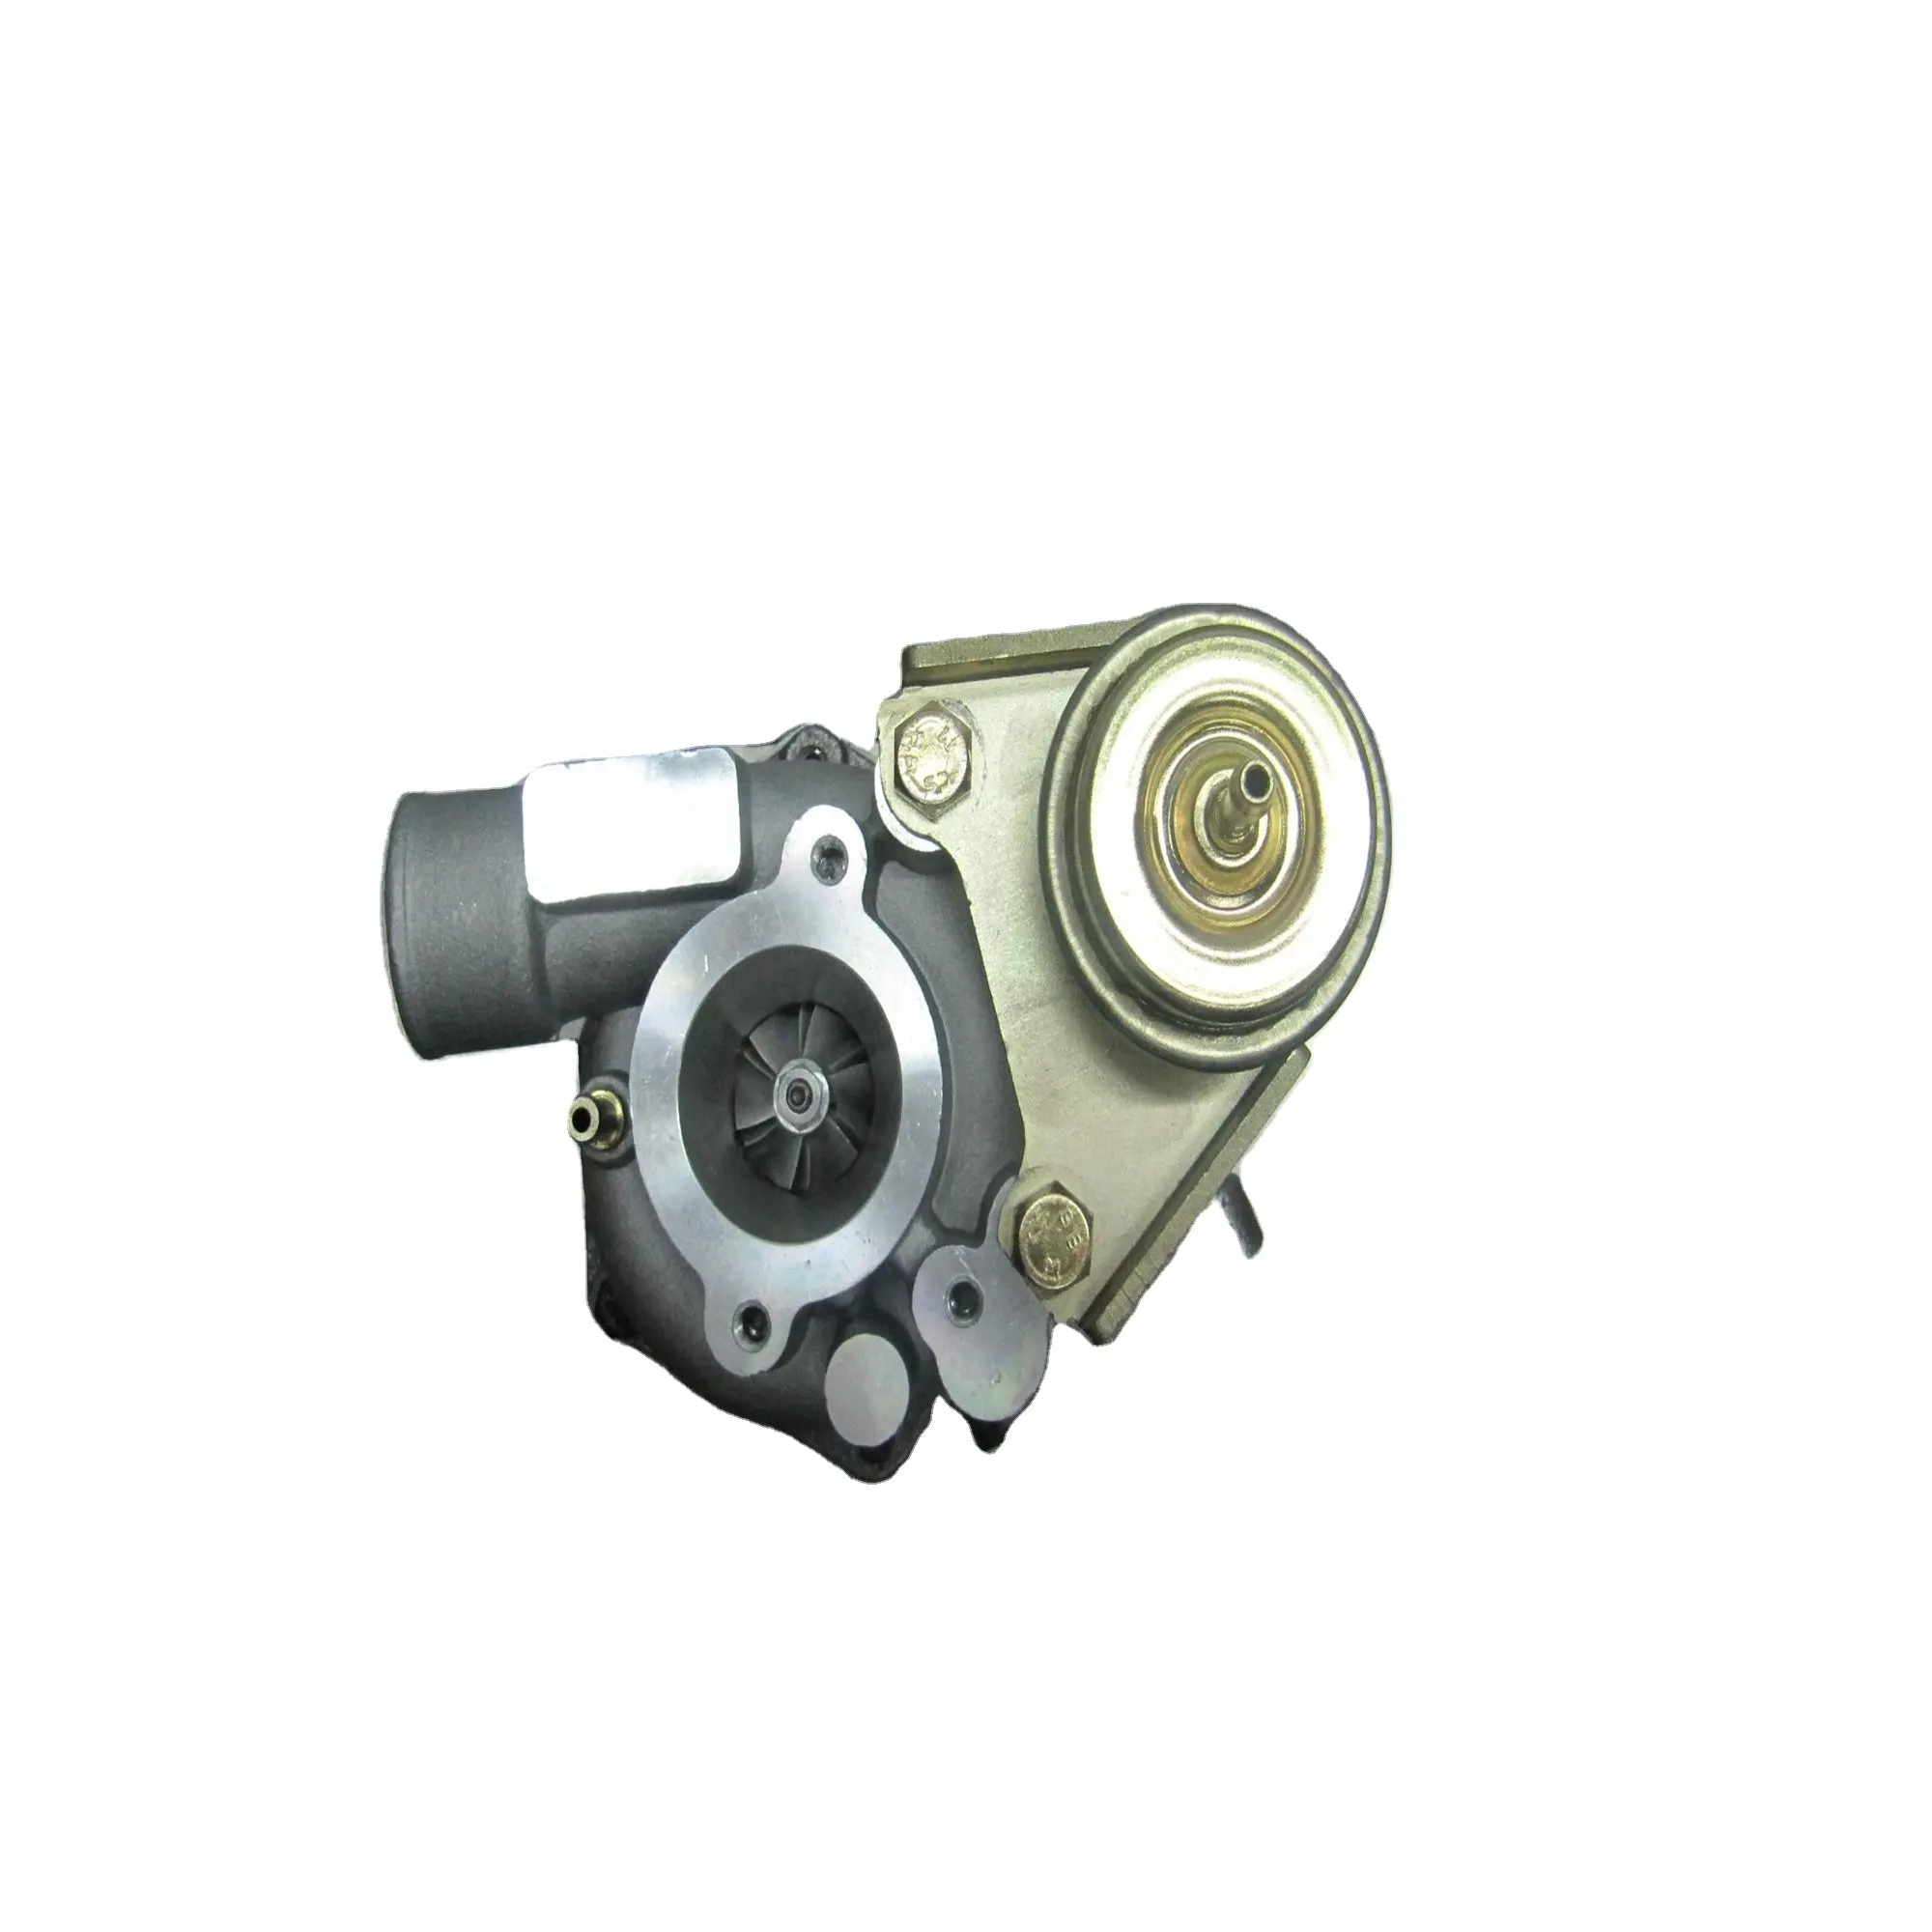 Urbo-turbocompresor para motor itsuishi ajero INI 430 30, 49130-01610 4913001610 49130-01600 151515A054 T02 02